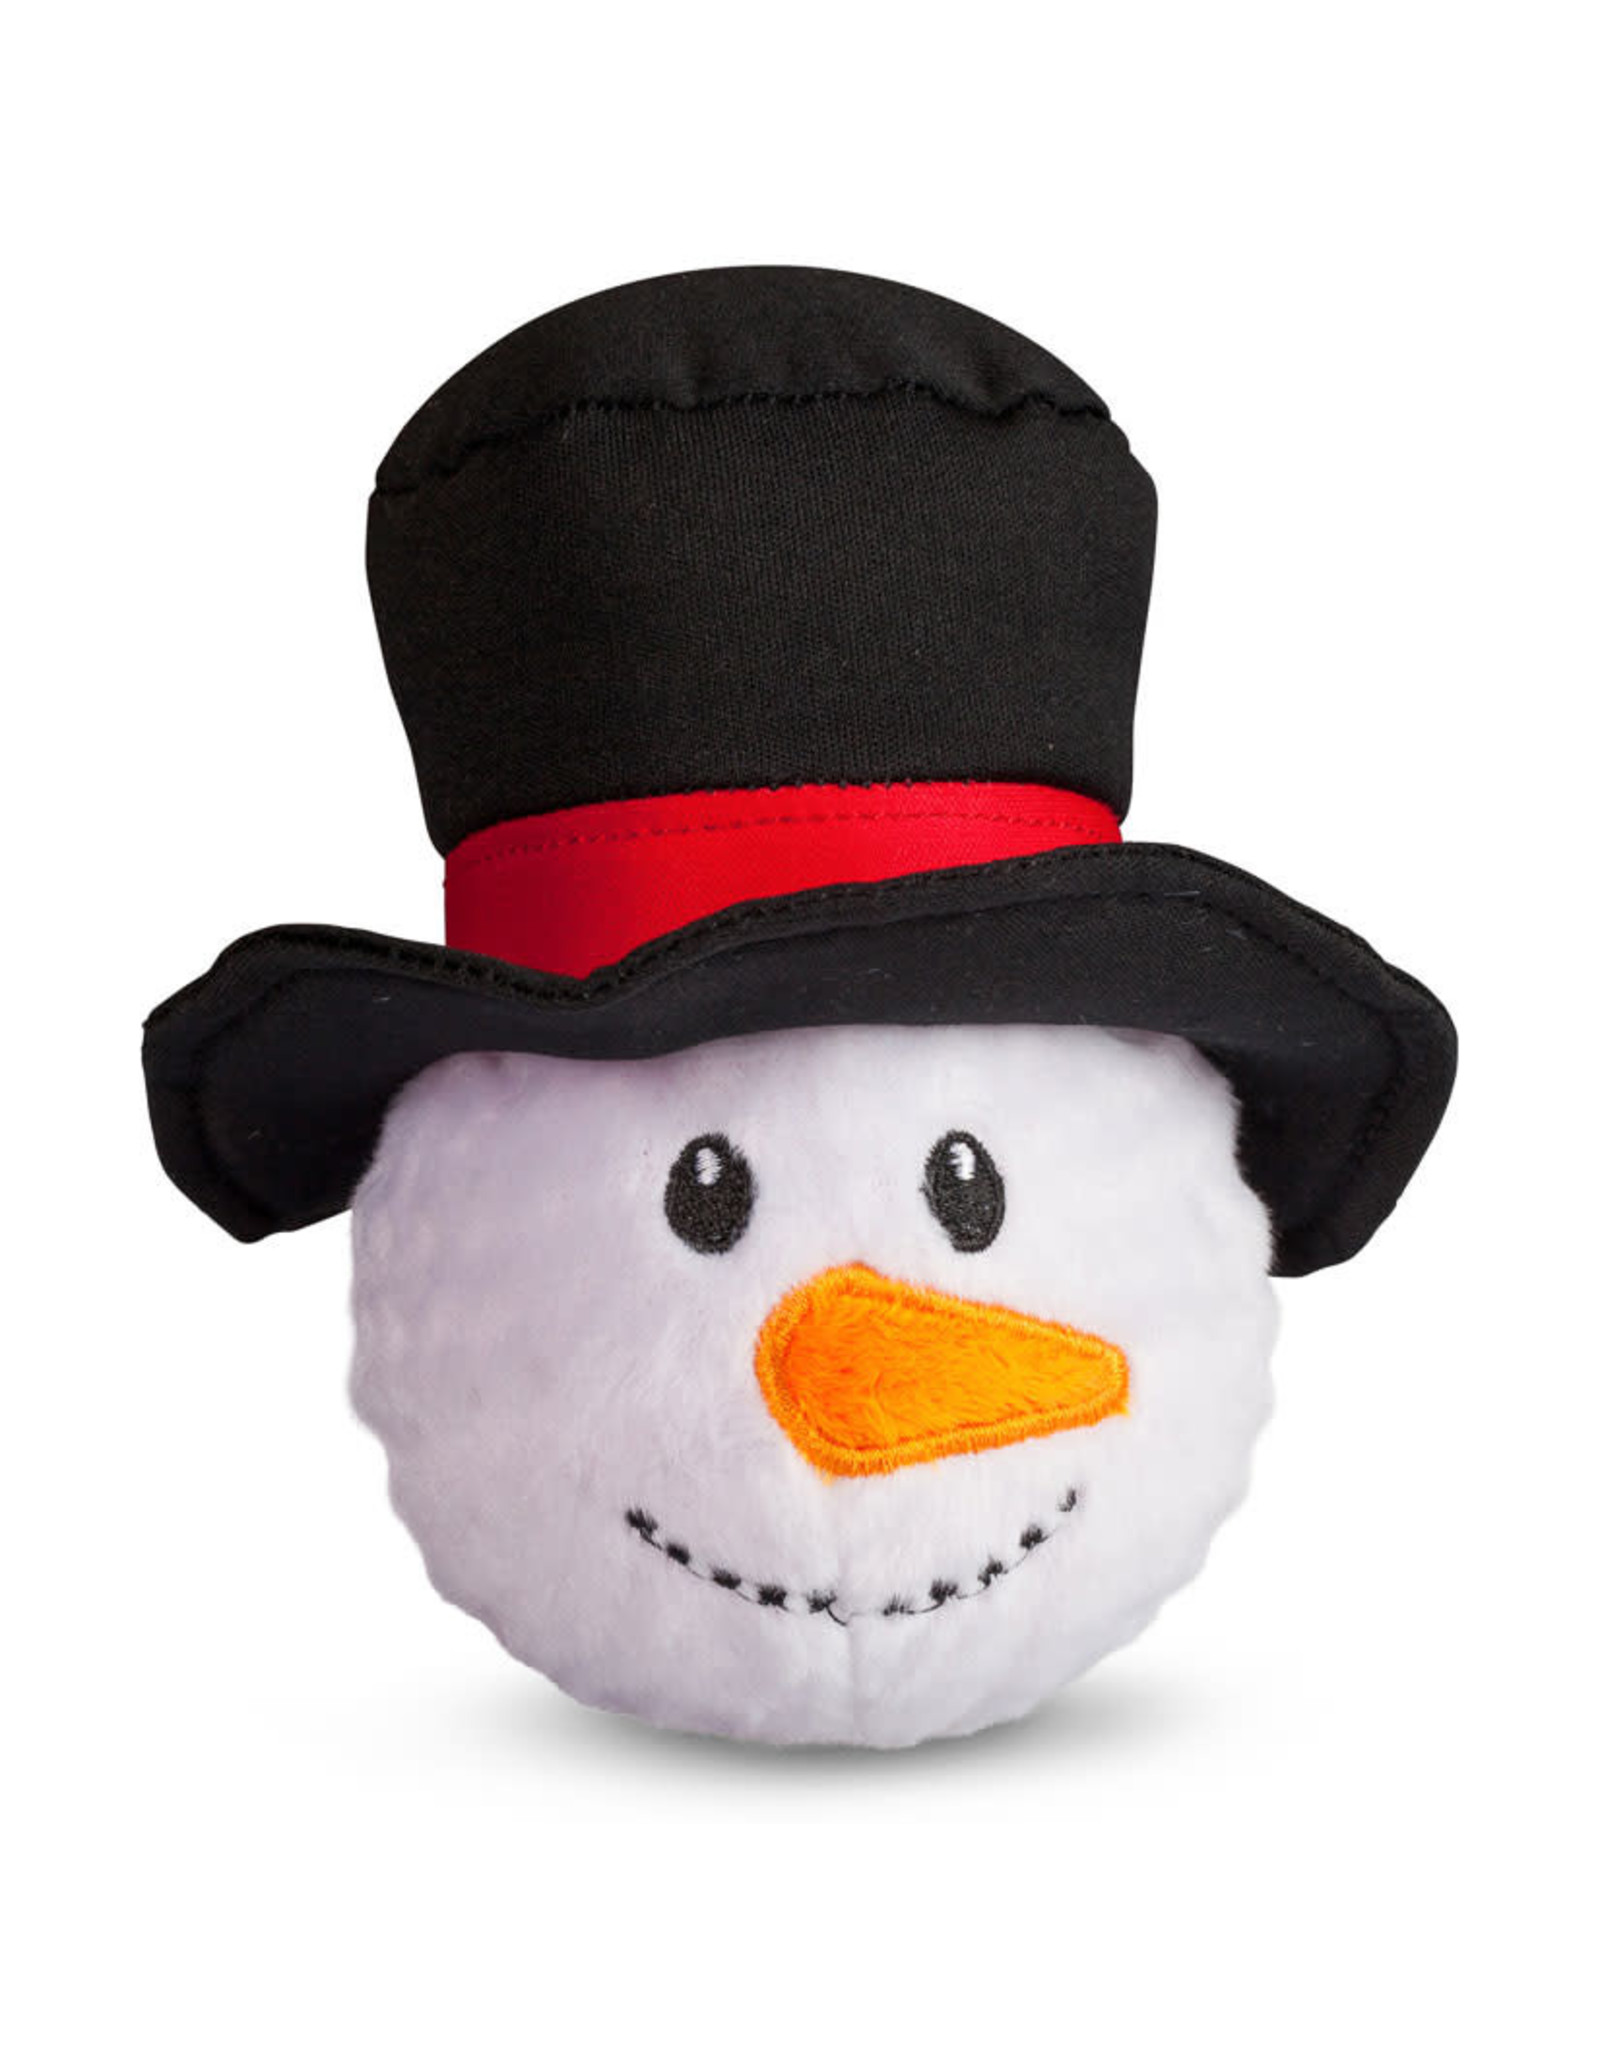 Fabdog Fabdog Holiday Faball: Snowman, M/L